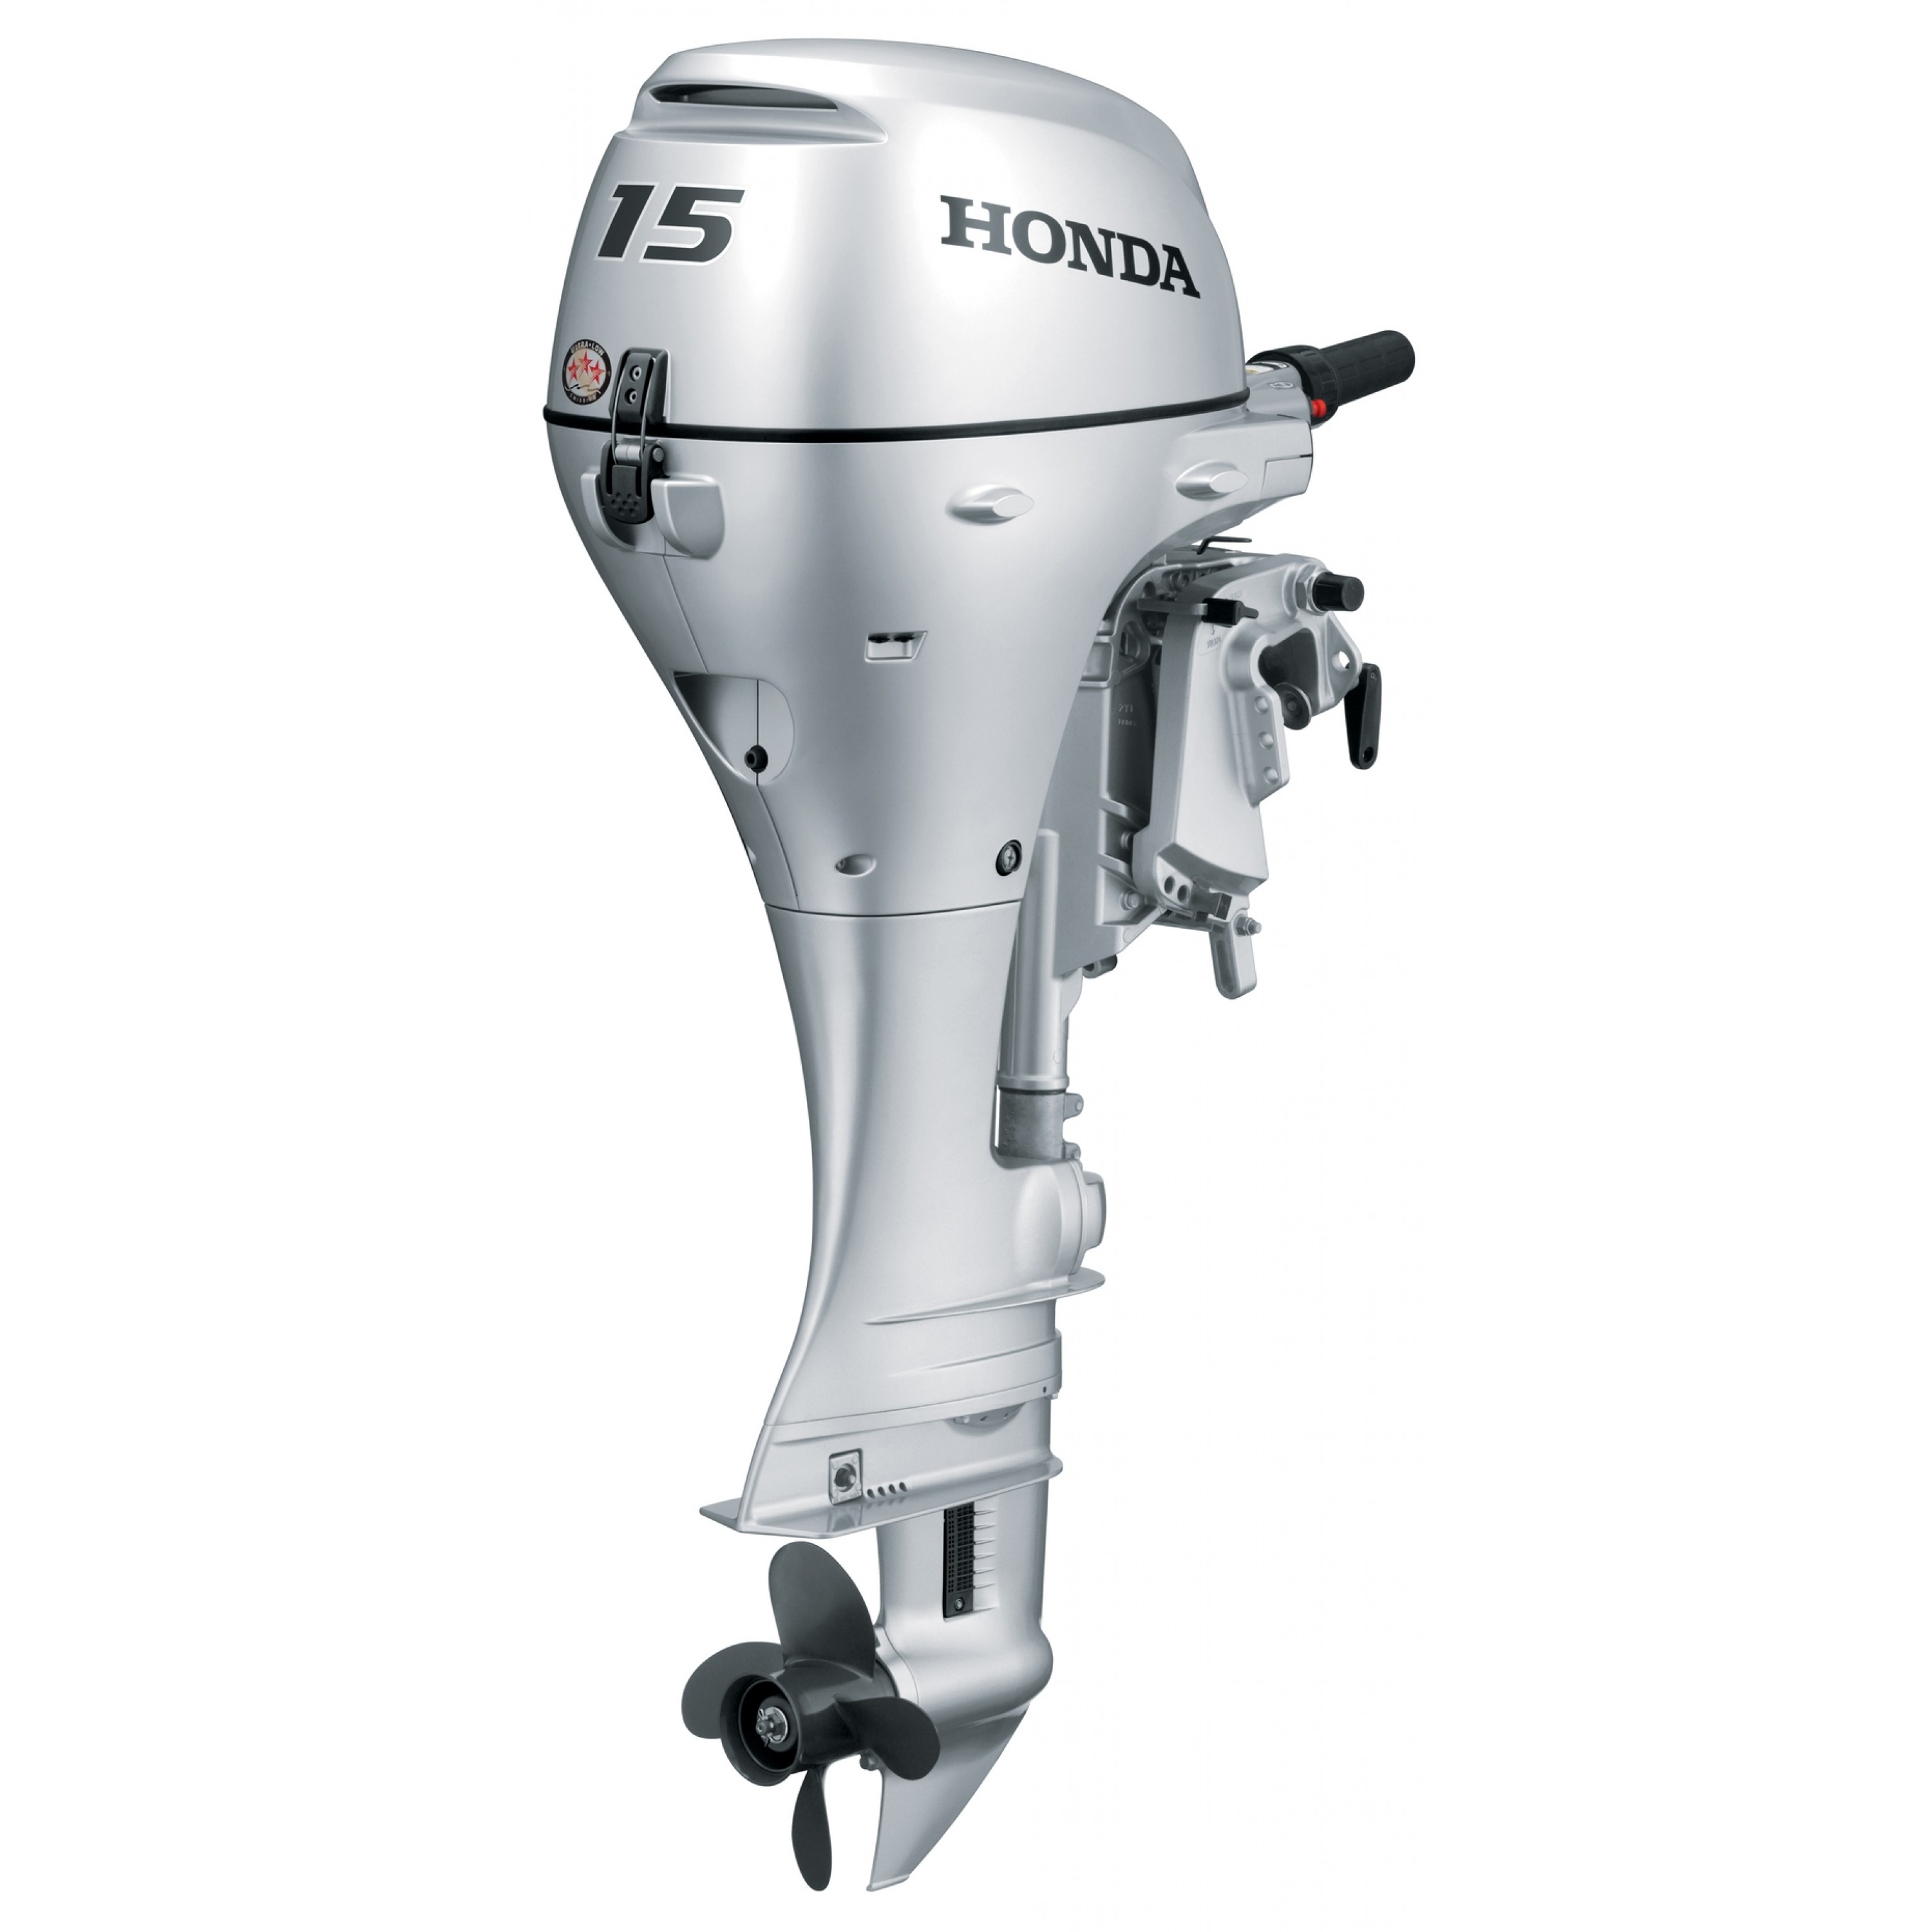 15 HP Honda Outboard Motor, BF15DK3SHC